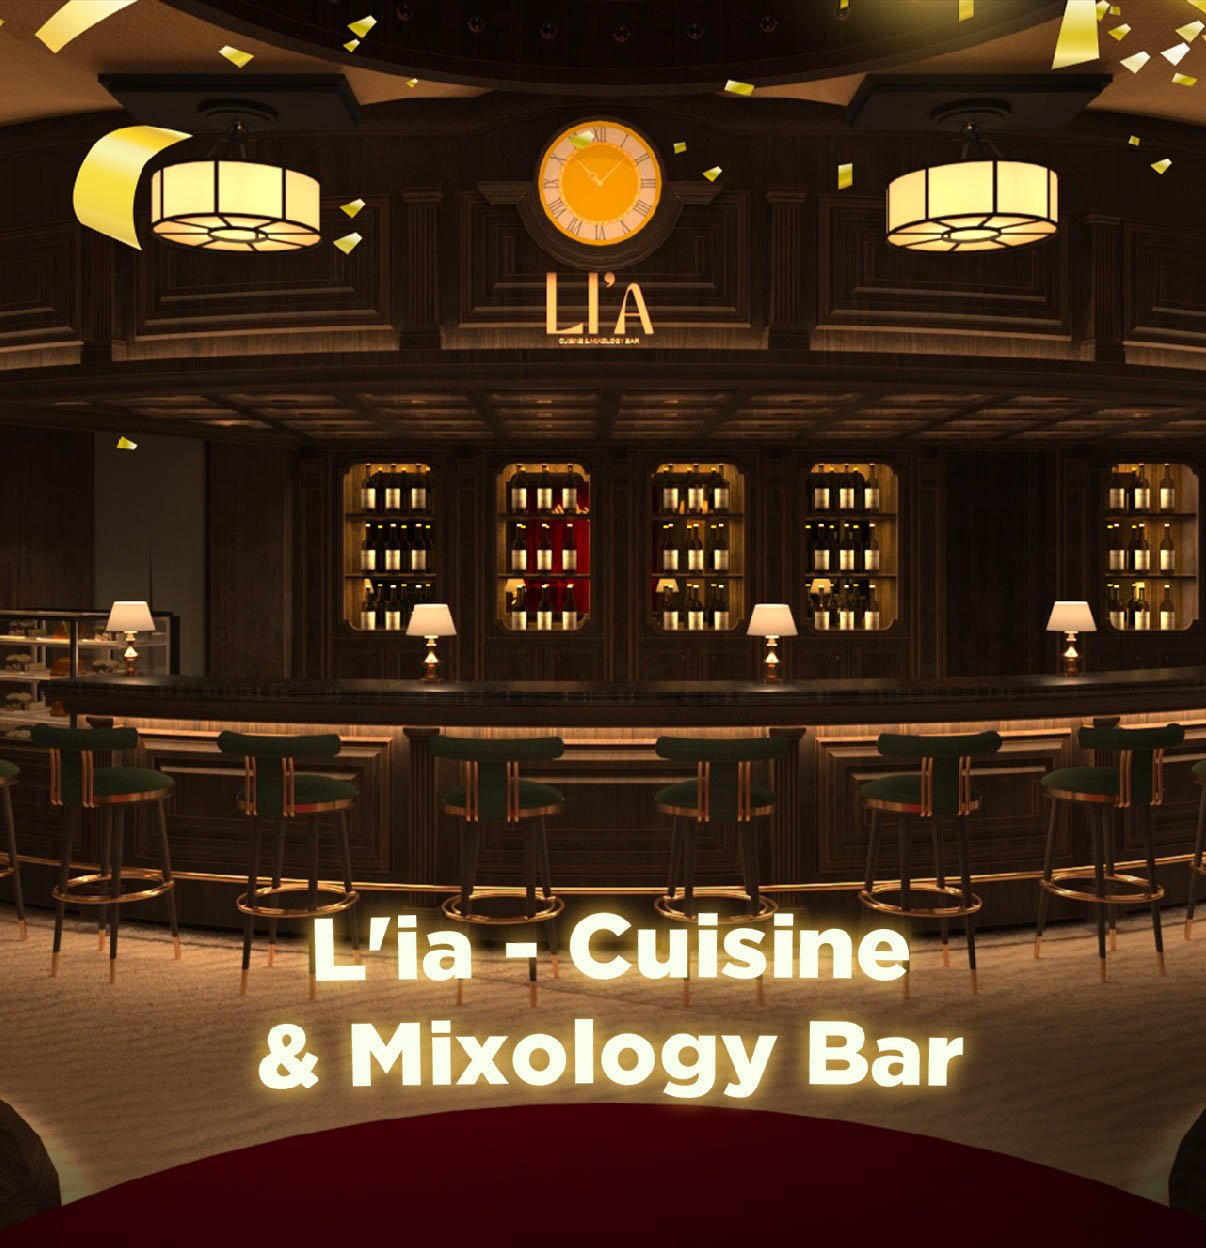 Li’a - Cuisine & Mixology Bar